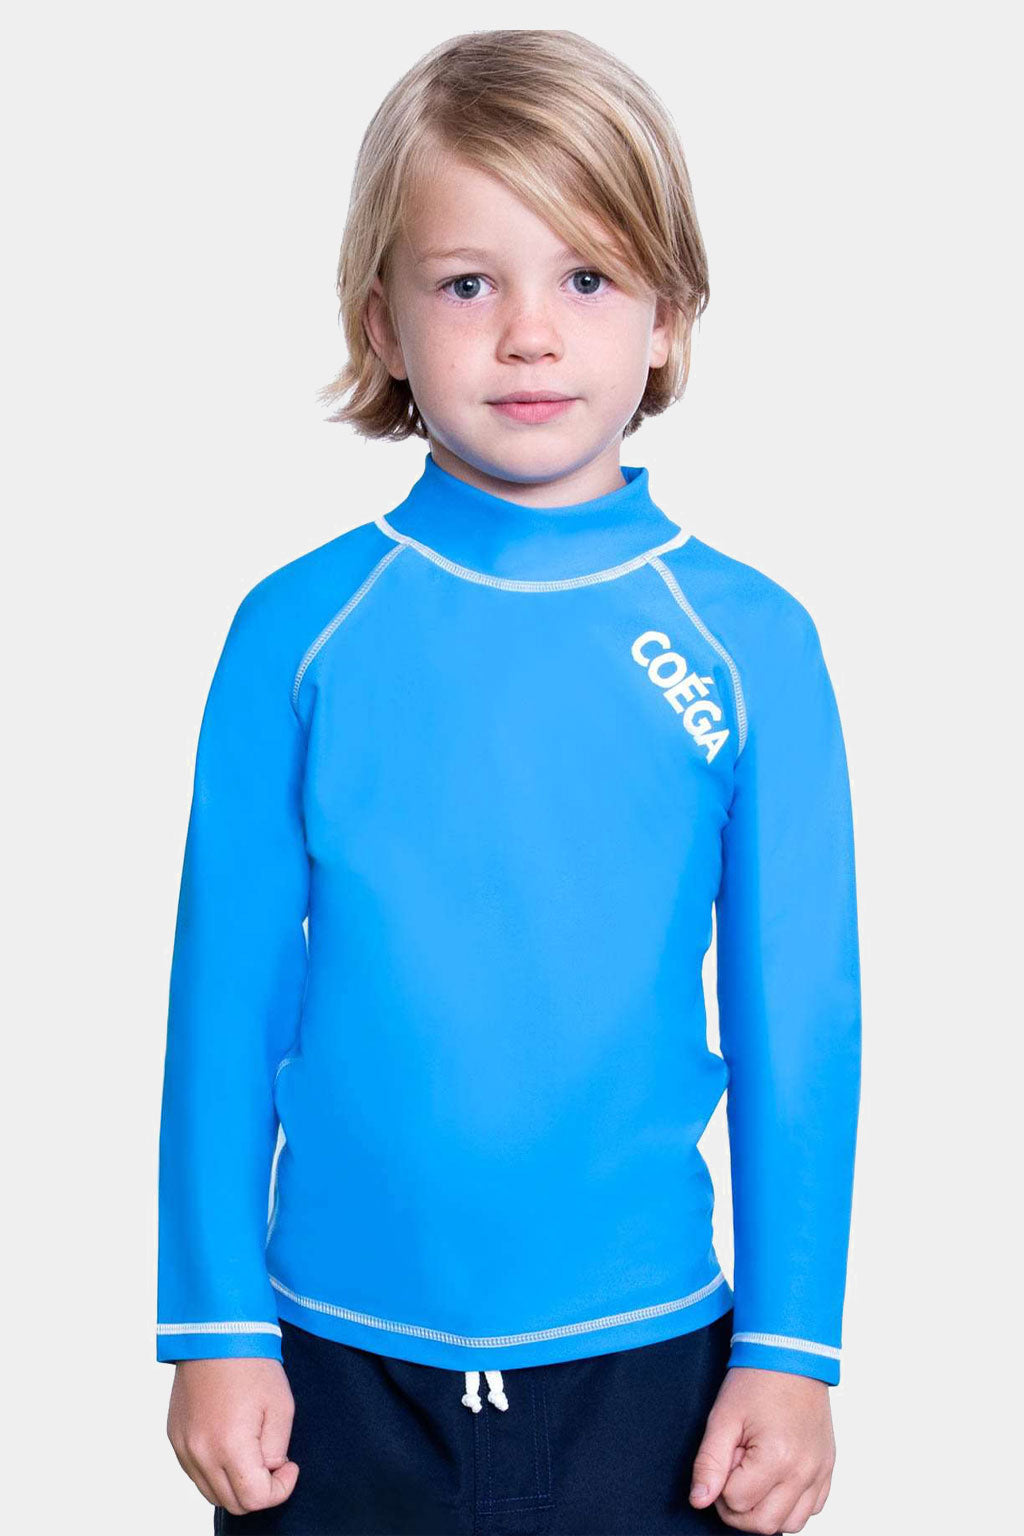 Coega - Kids Rashguard Long Sleeve